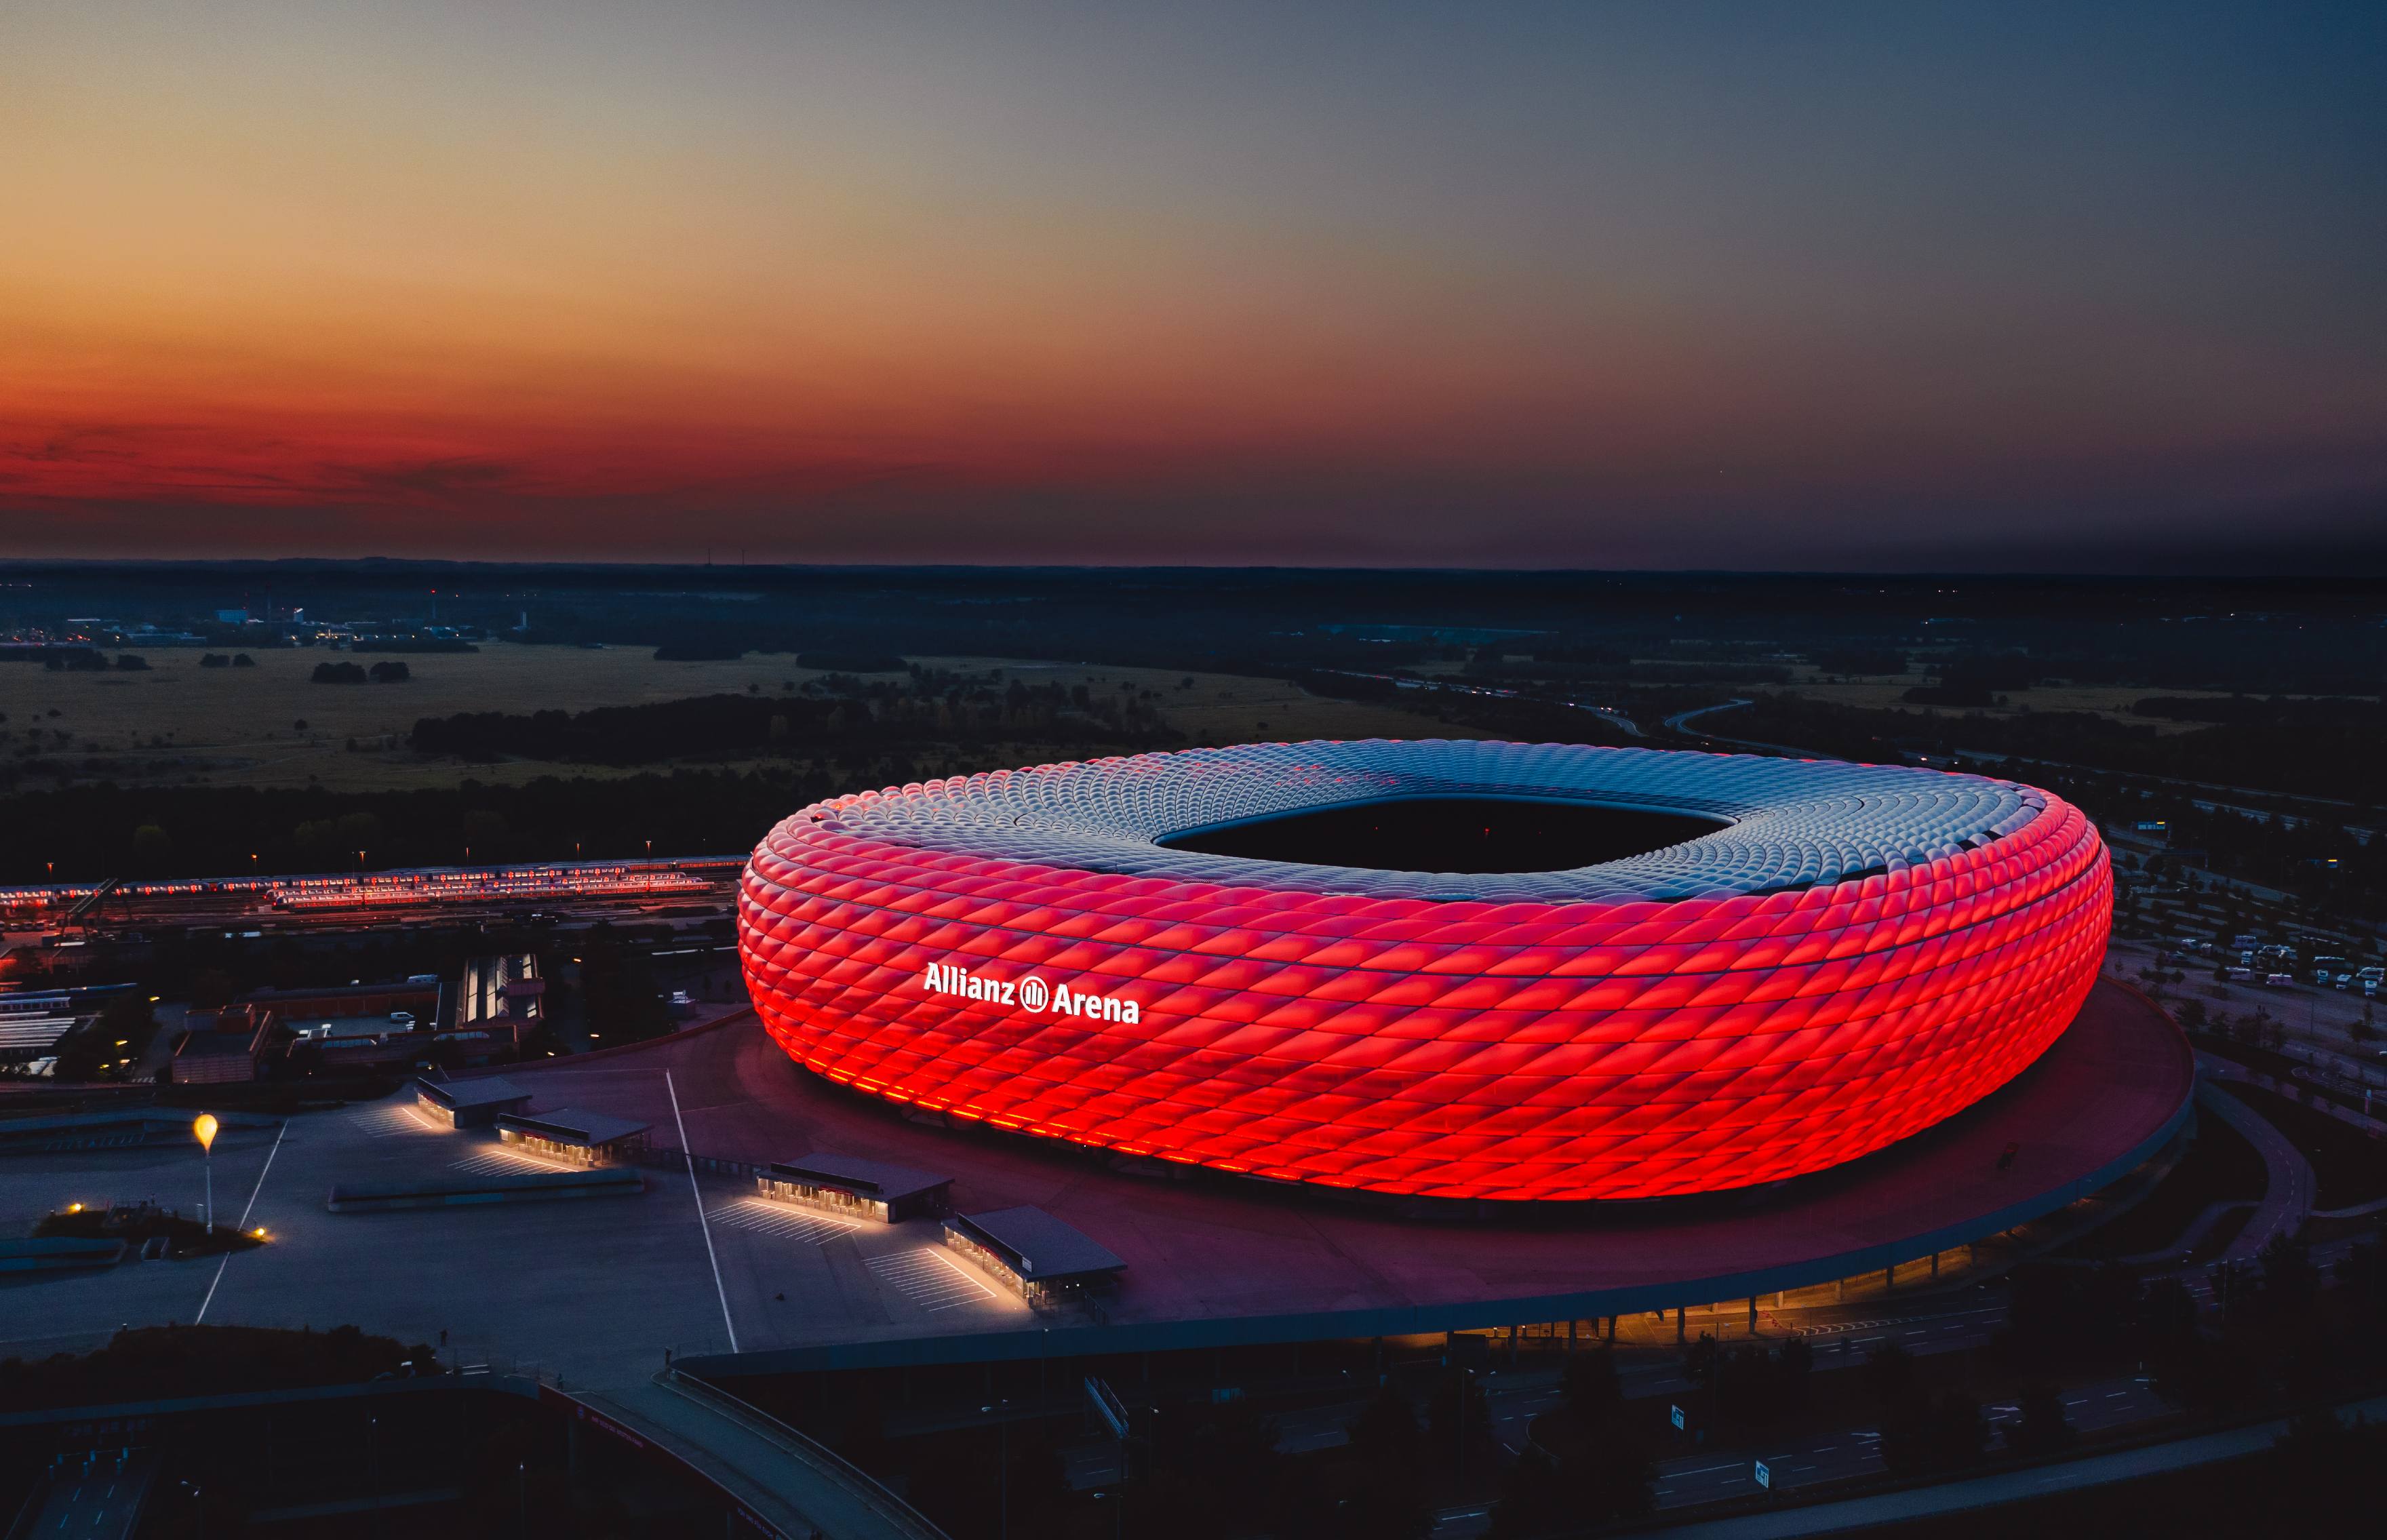 The Allianz Arena, Munich (Image: uslatar/Shutterstock)